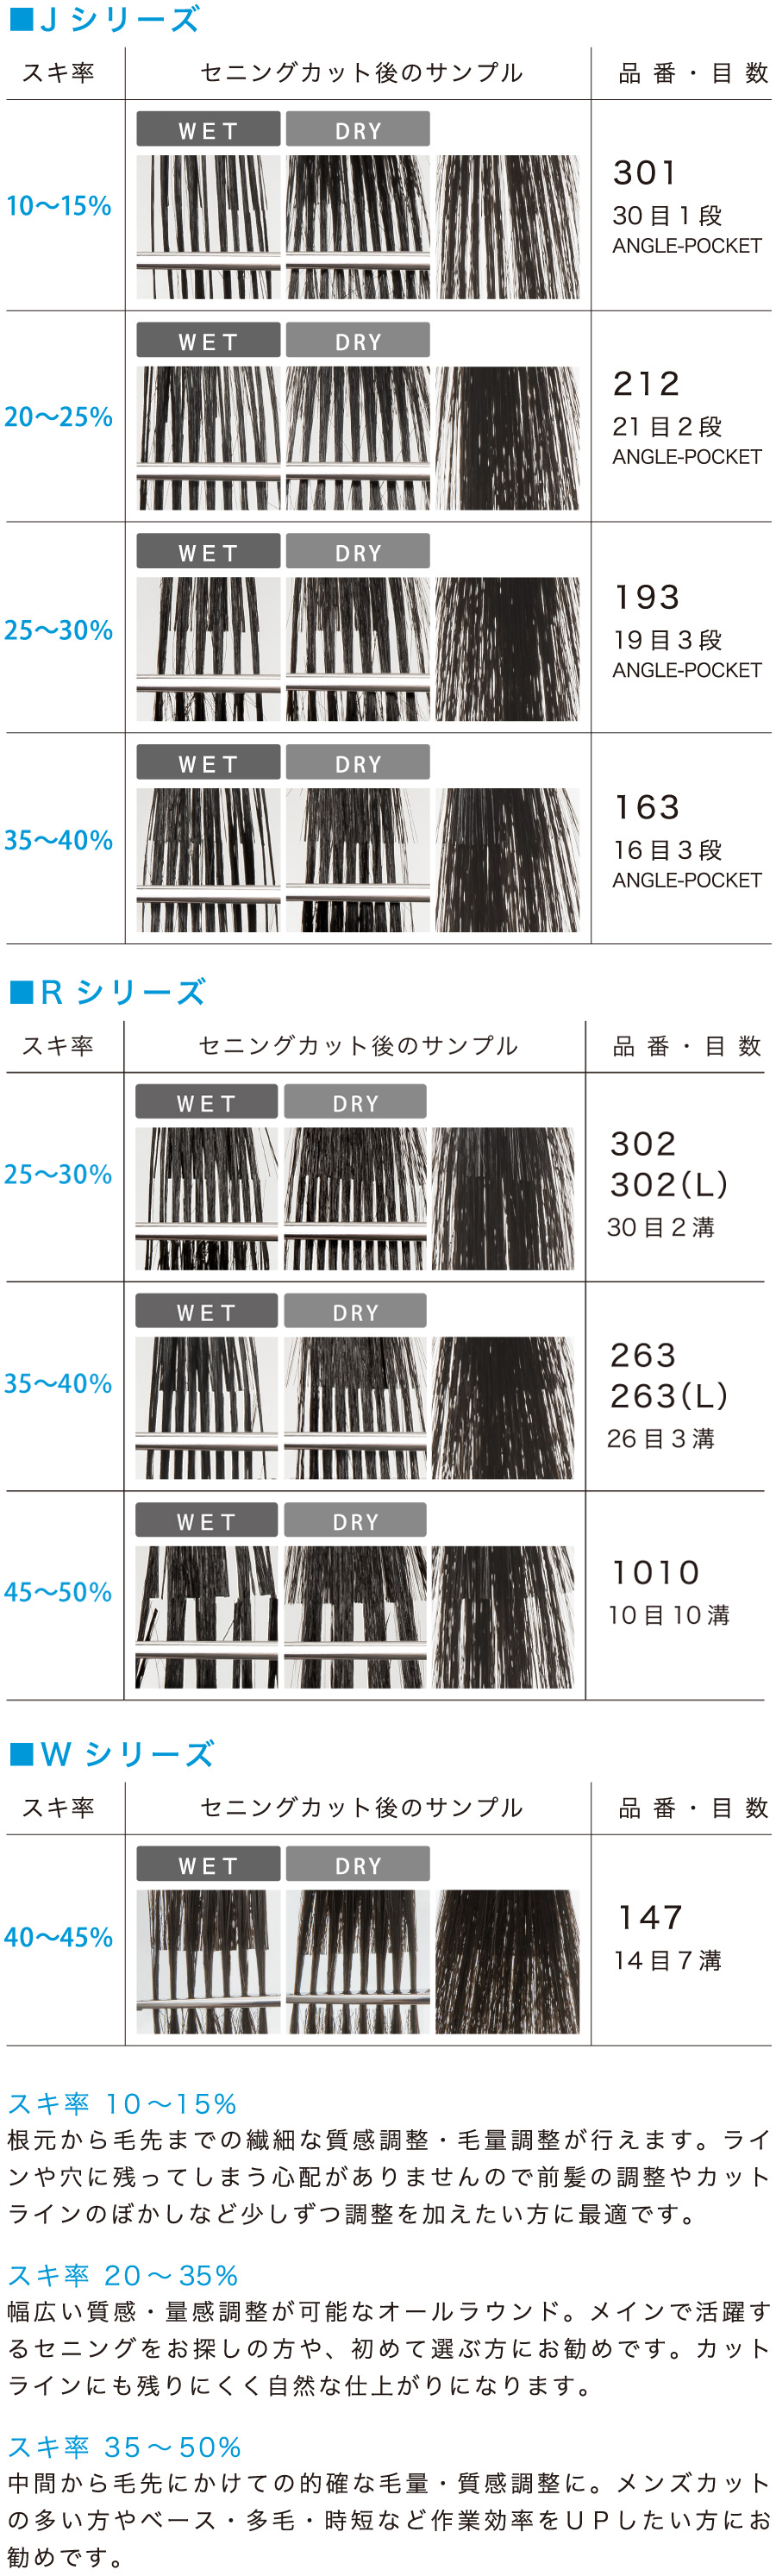 J-series | OKAWA pro-scissors 理美容ハサミのオオカワプロシザーズ